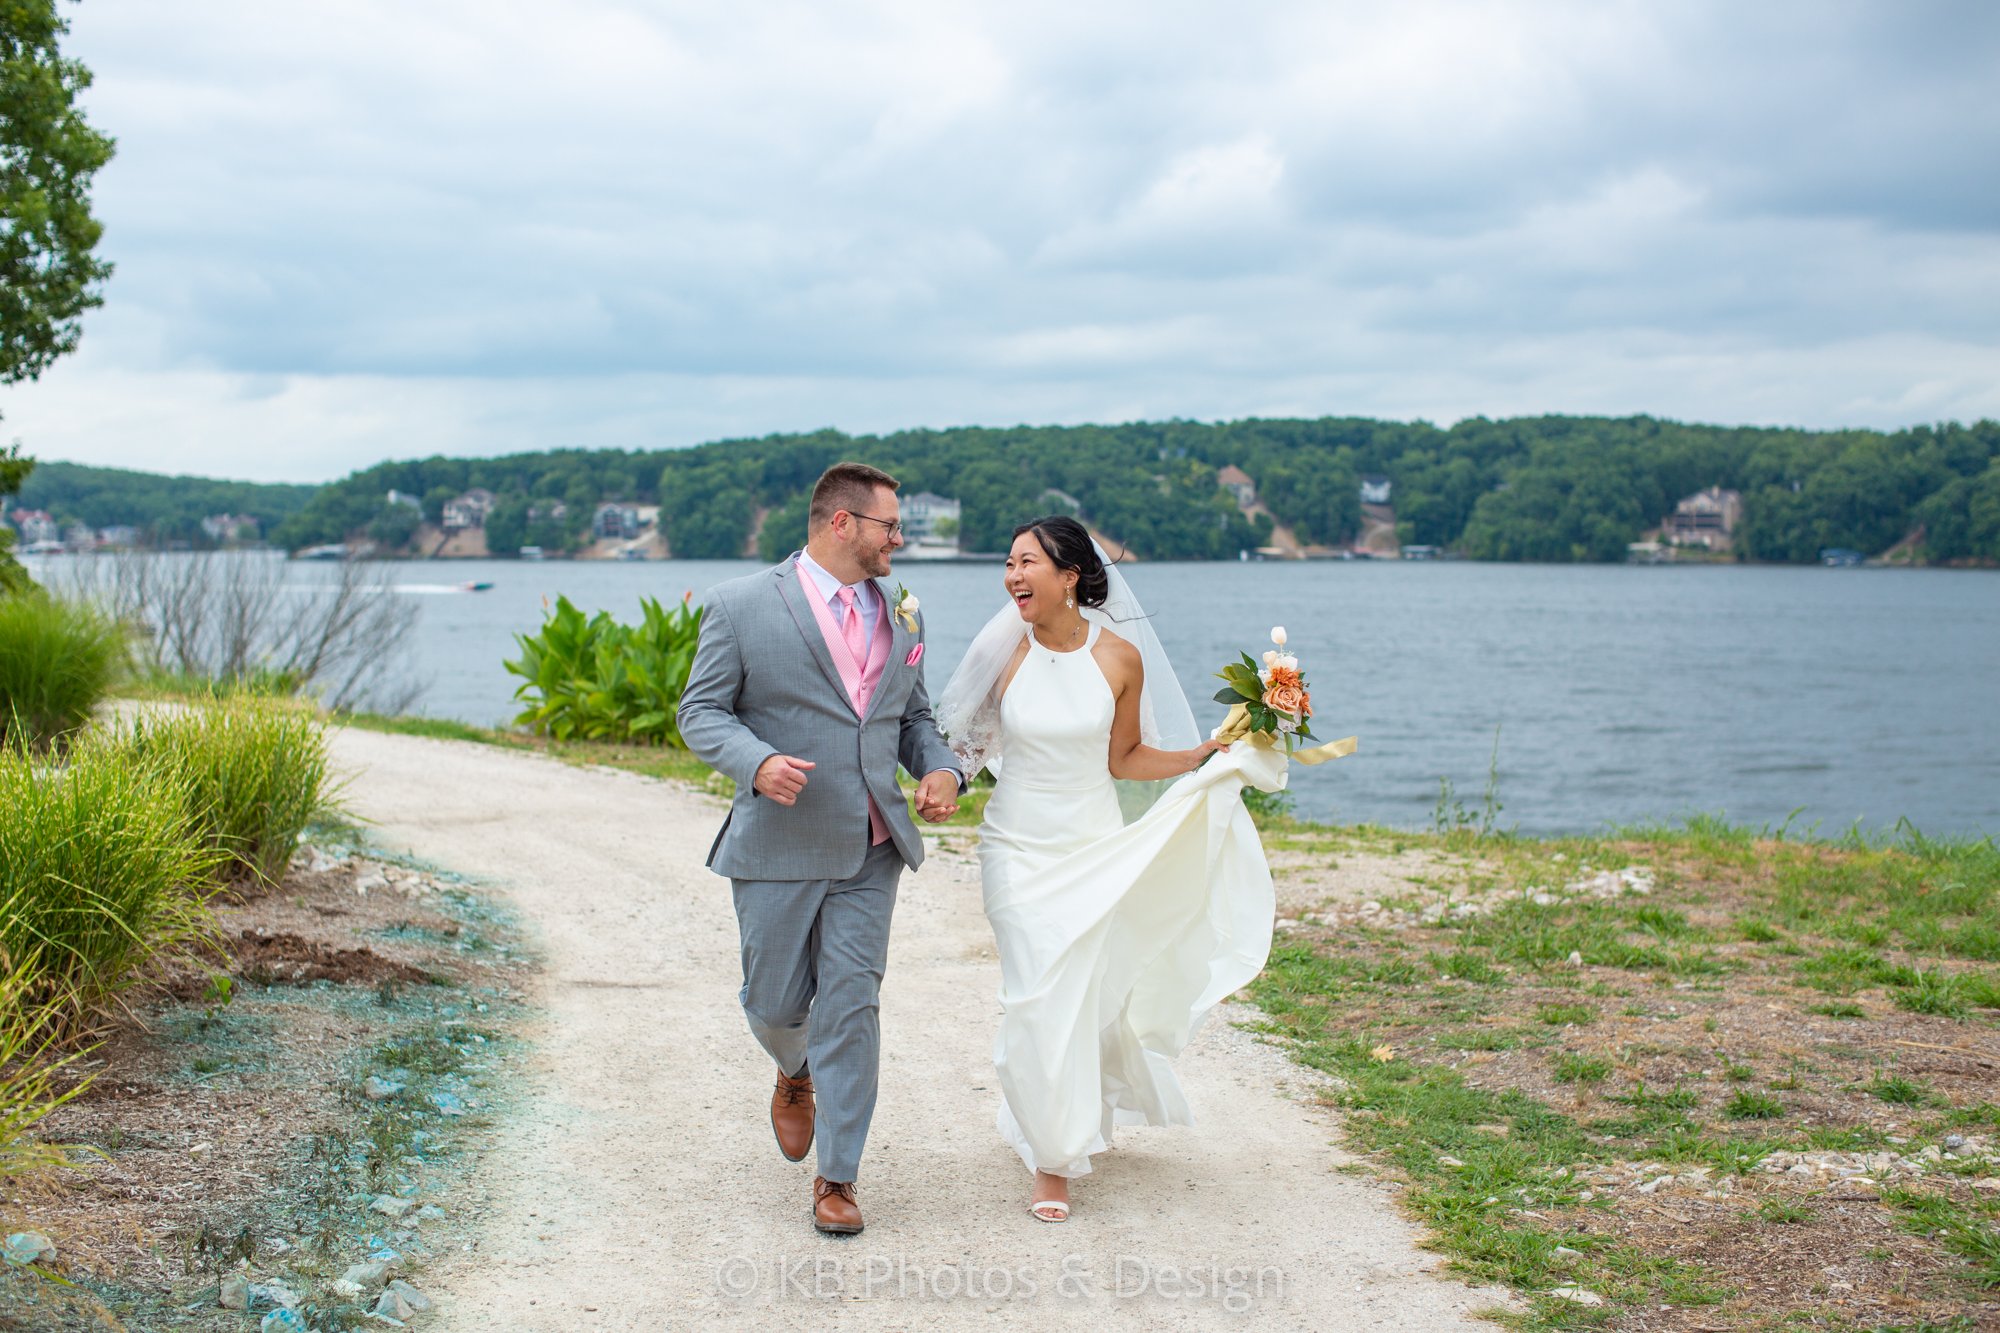 Wedding-Destination-Photography-Lake-of-the-Ozarks-Missouri-Nick_Irene-Jefferson-City-bride-groom-Lodge-of-Four-Seasons-wedding-photographer-KB-Photos-and-Design-214.jpg